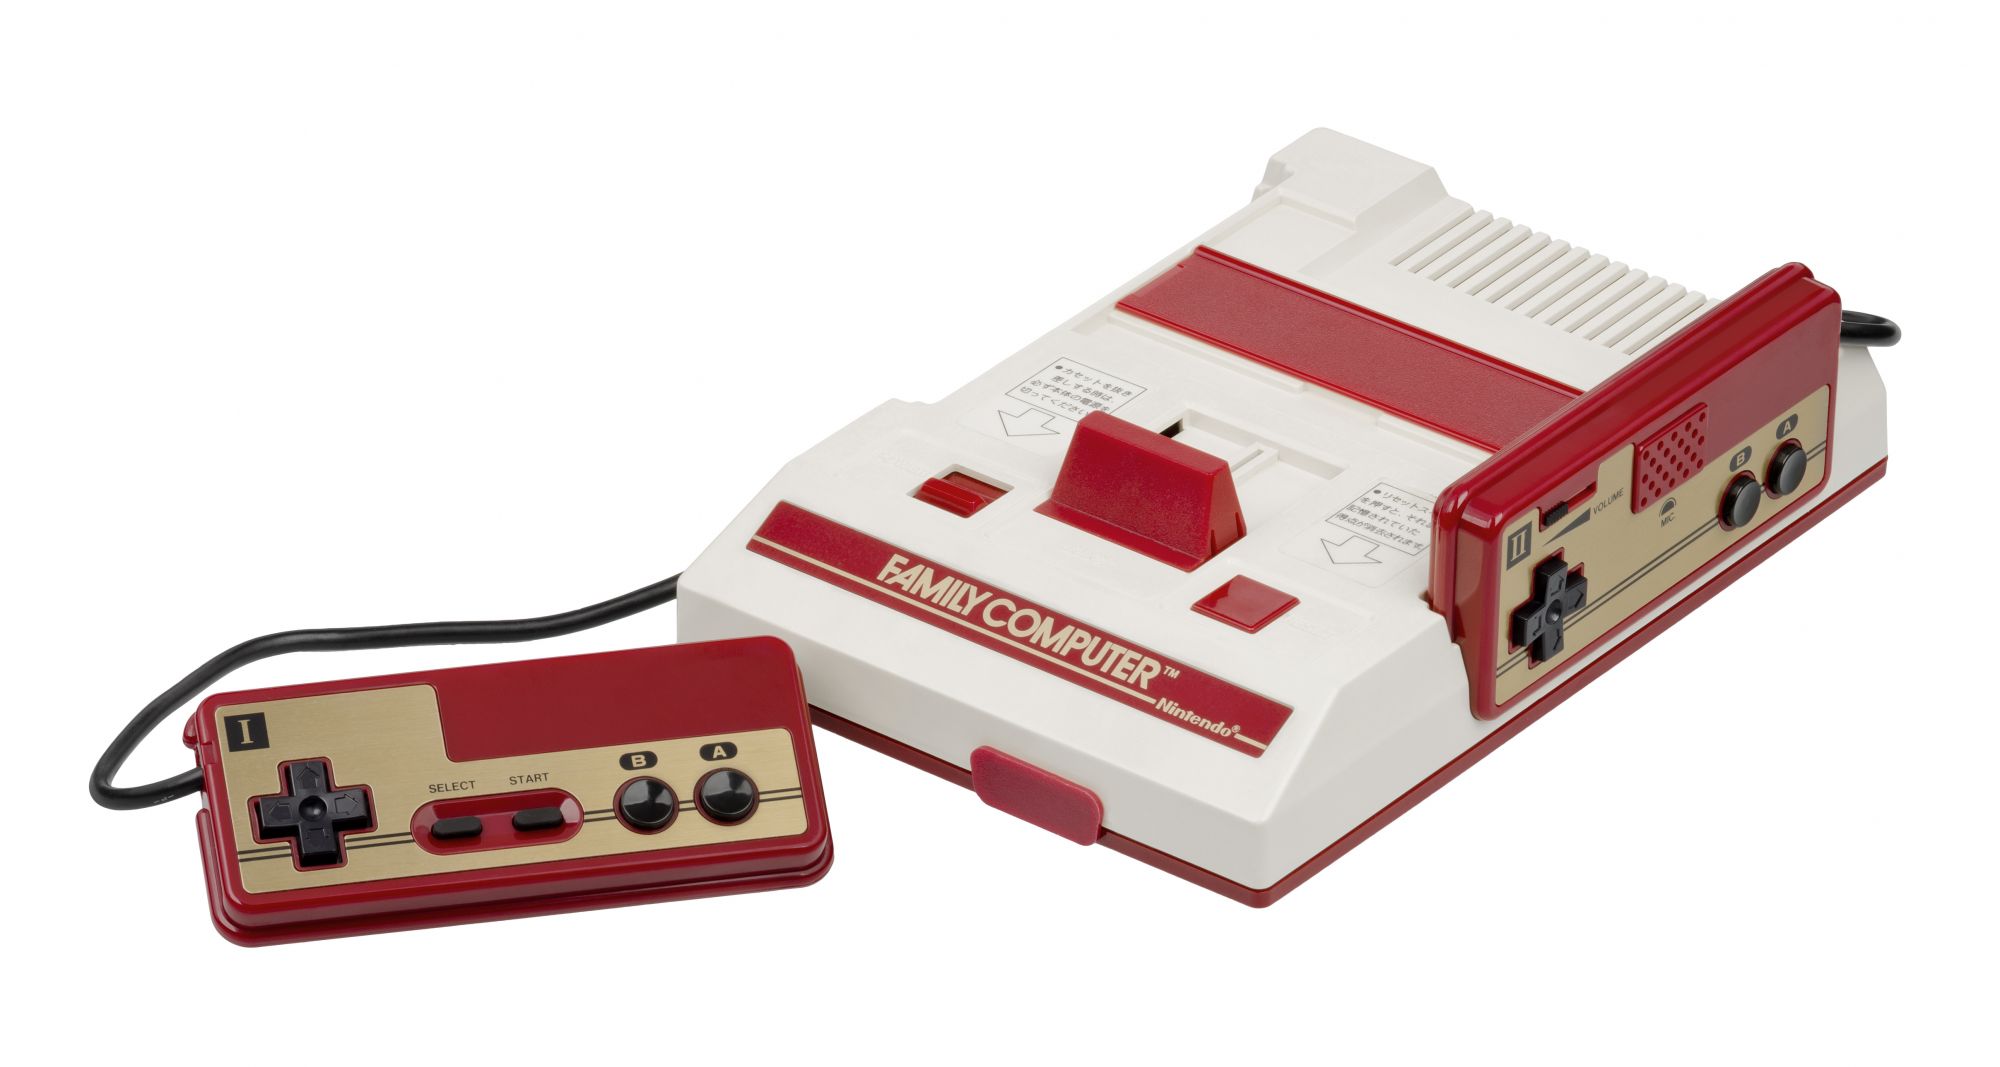 15 июля 1983 года в Японии начались продажи консоли <i>Famicom</i>/<i>NES</i>